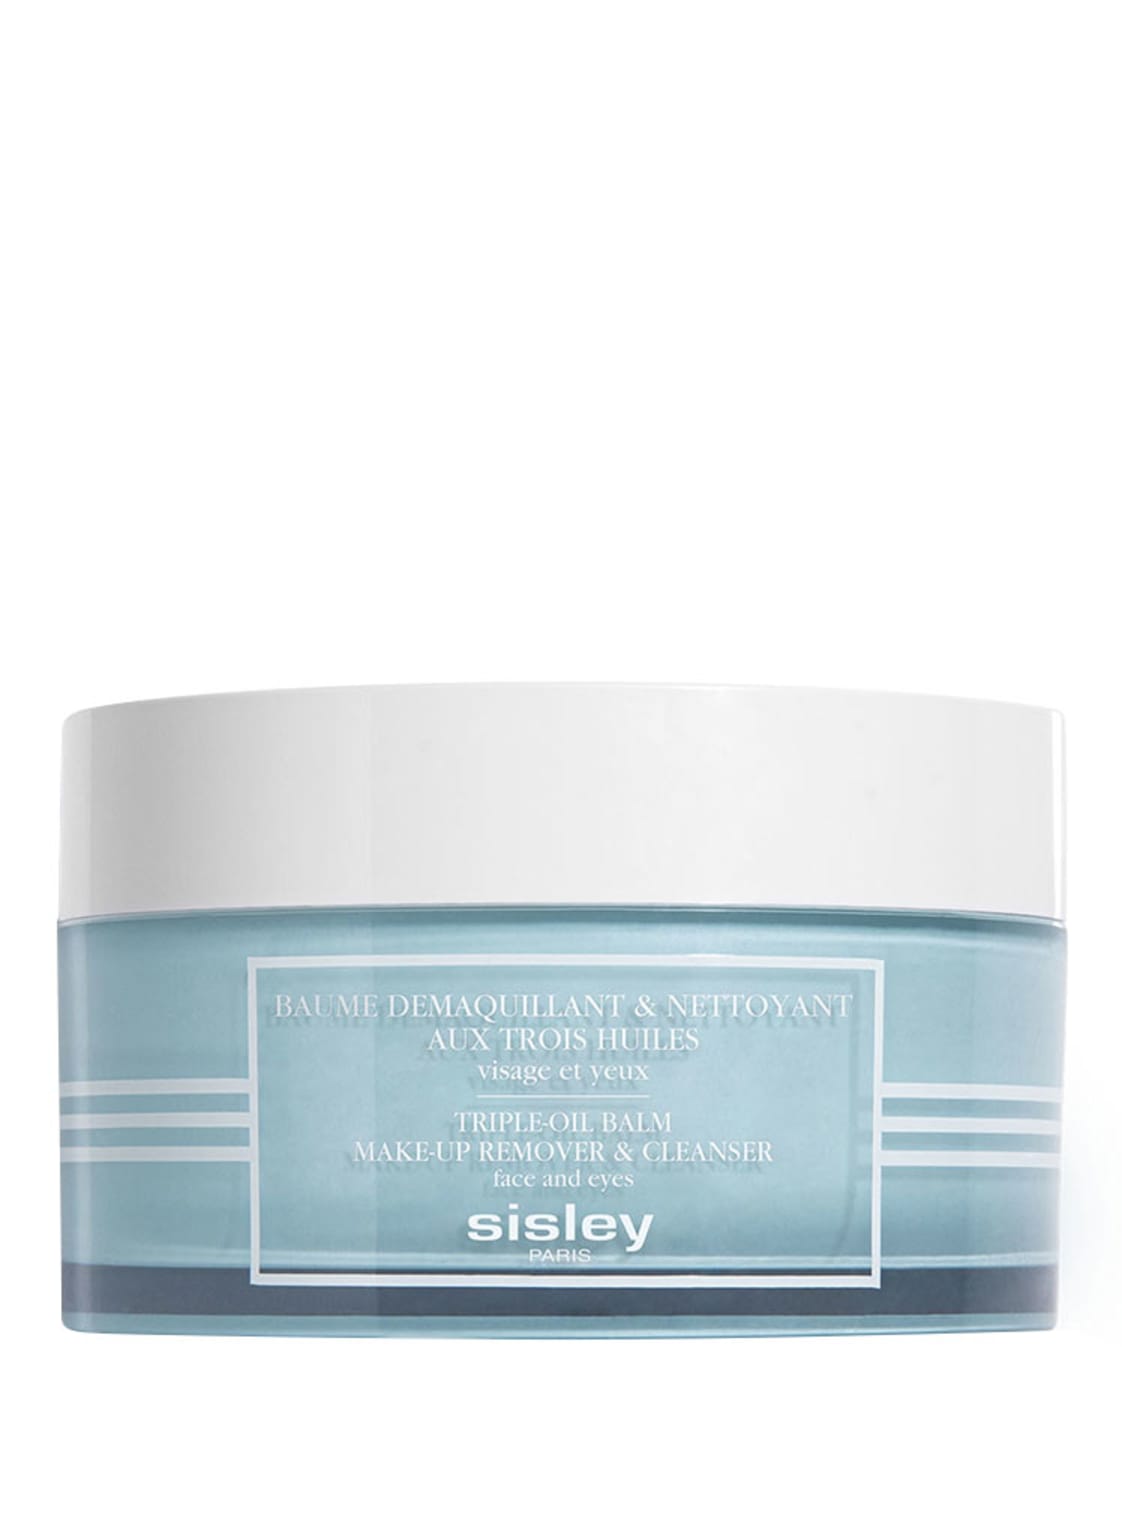 Sisley Paris Baume Demaquillant & Nettoyant Triple-Oil Balm Make-up Remover & Cleanser 125 g von sisley Paris